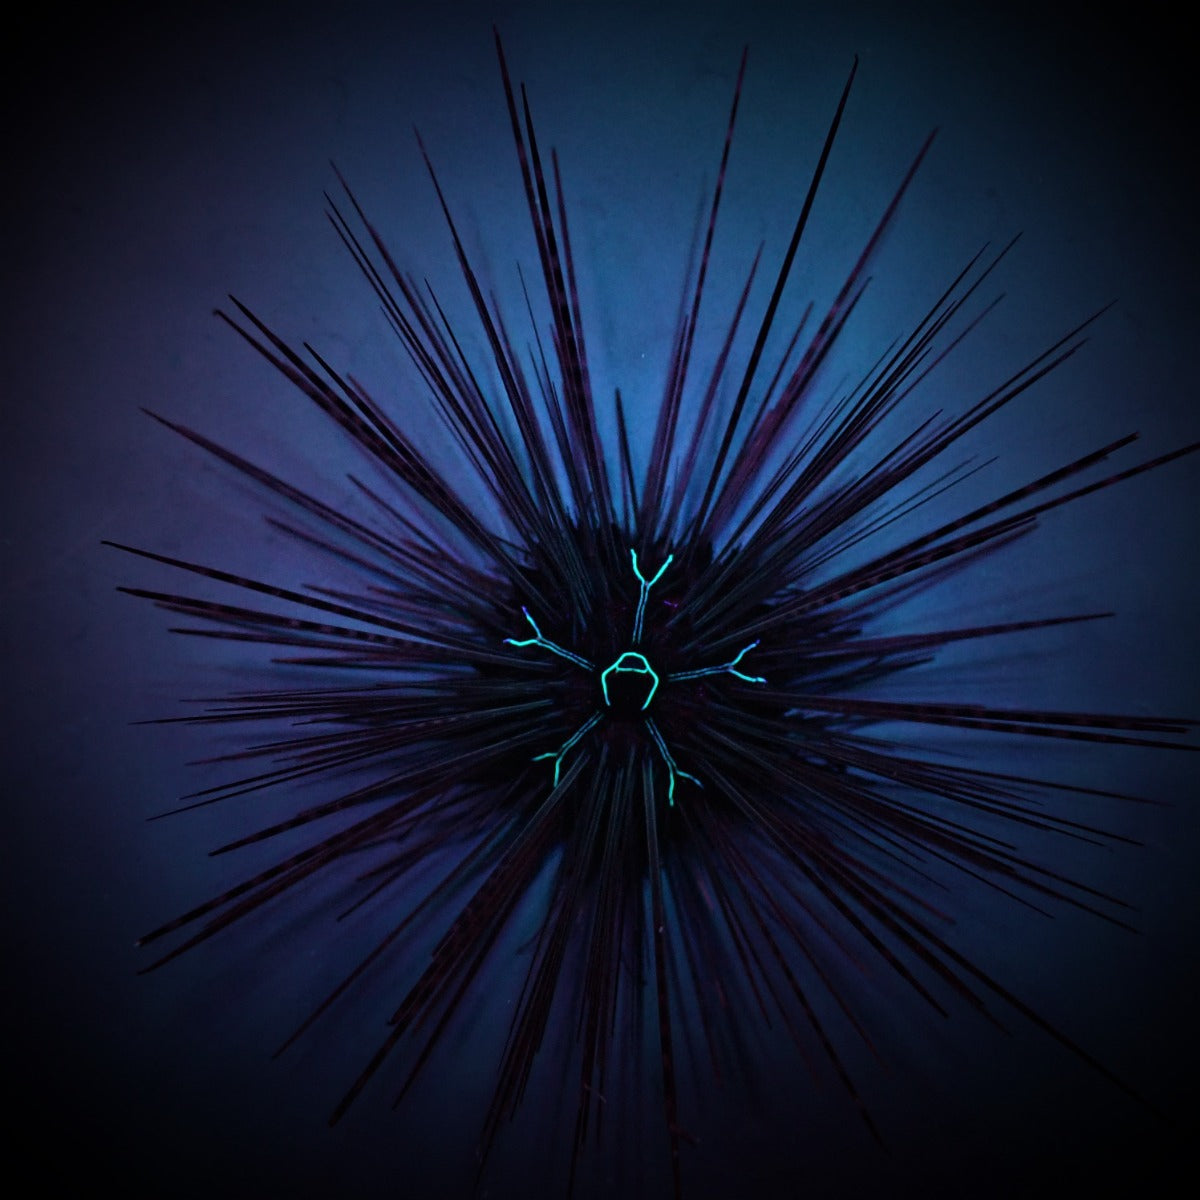 Diadema savignyi - Long-spined Sea urchin